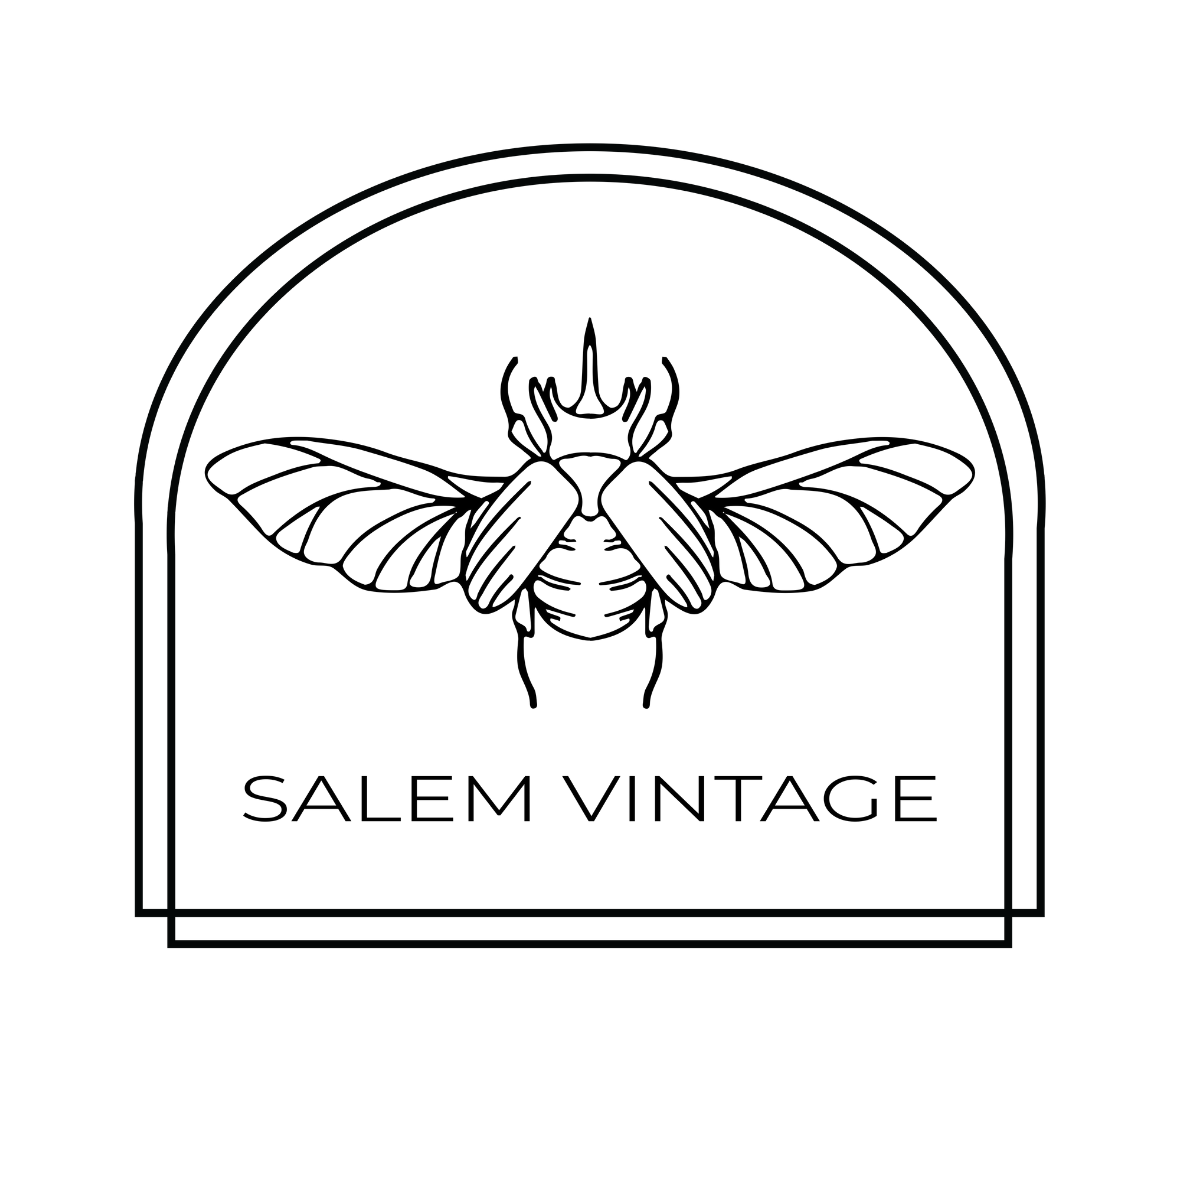 Salem Vintage